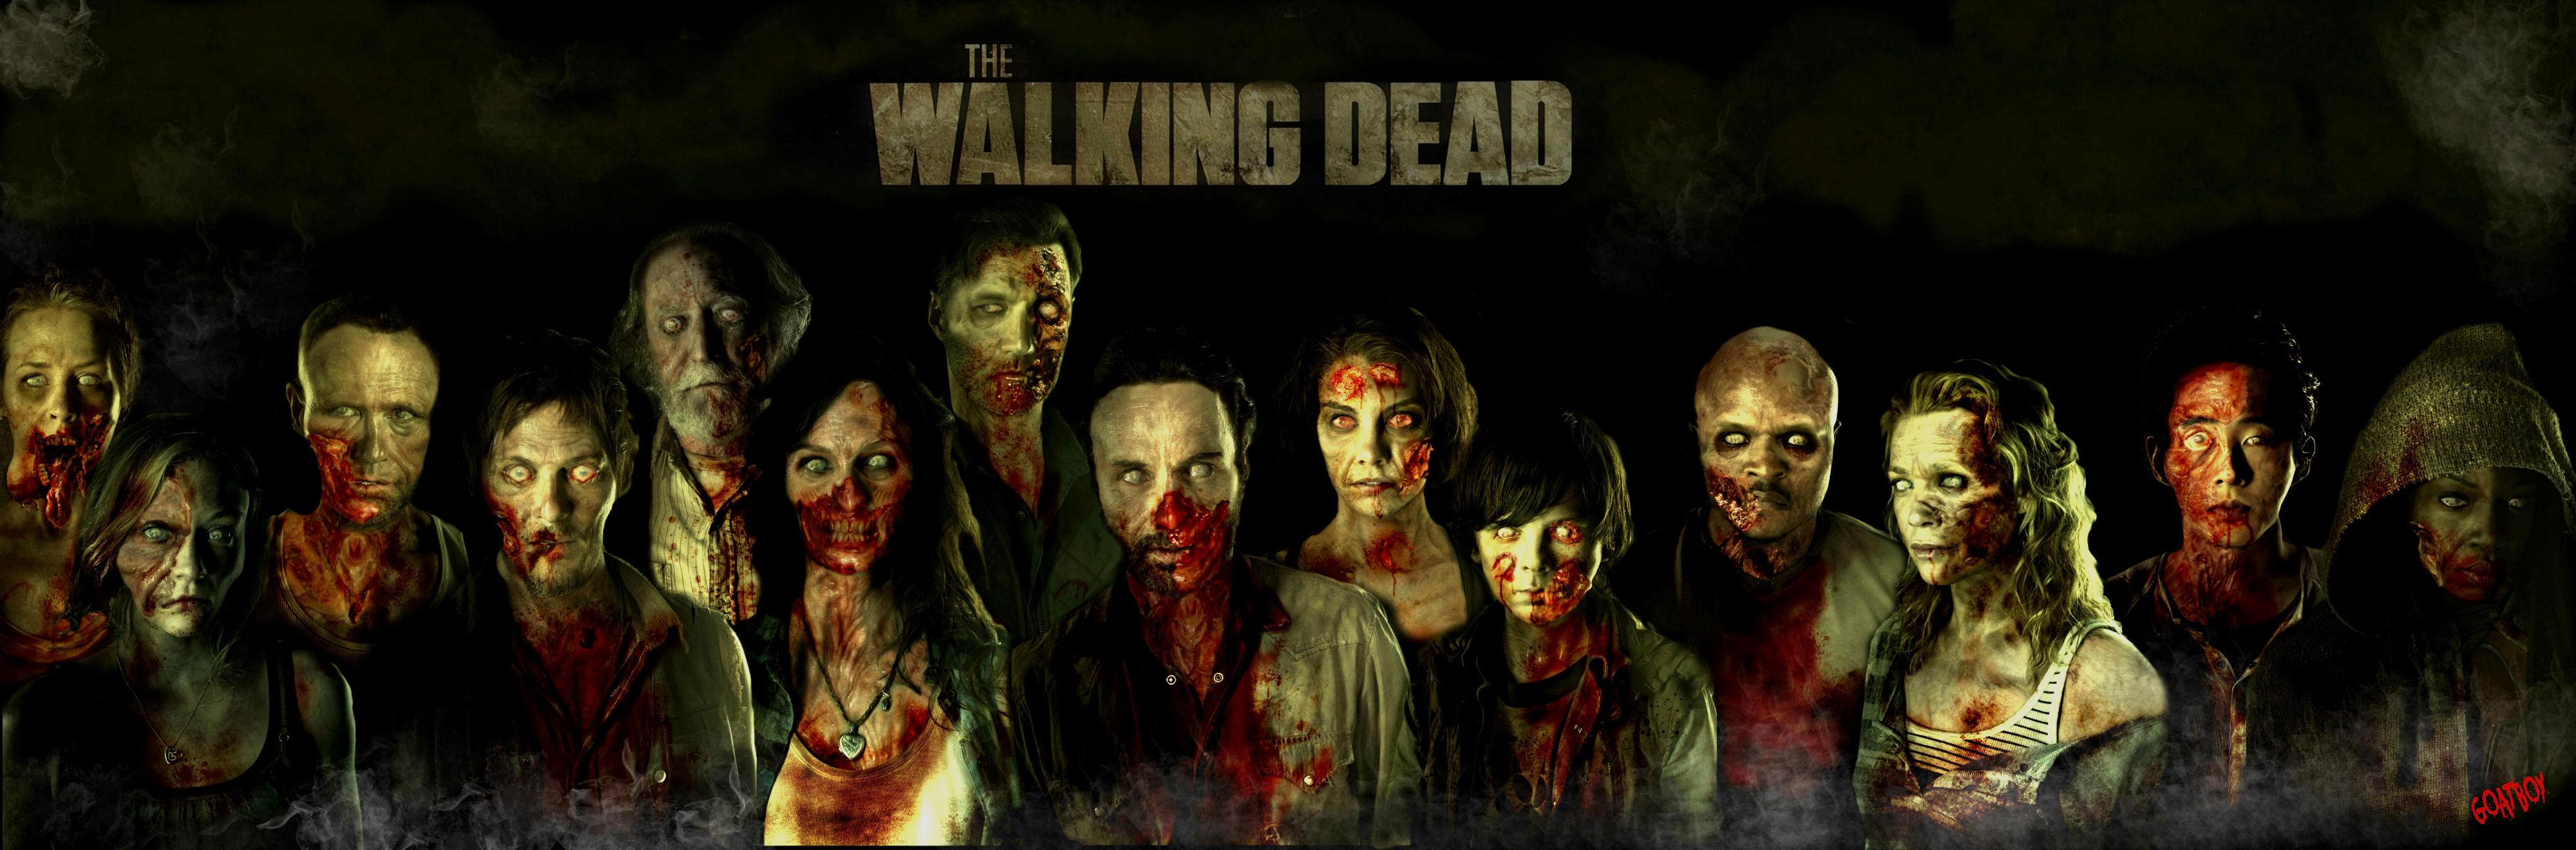 Walking Dead Wallpaper Beautiful K9N WALLPAPERUN.COM